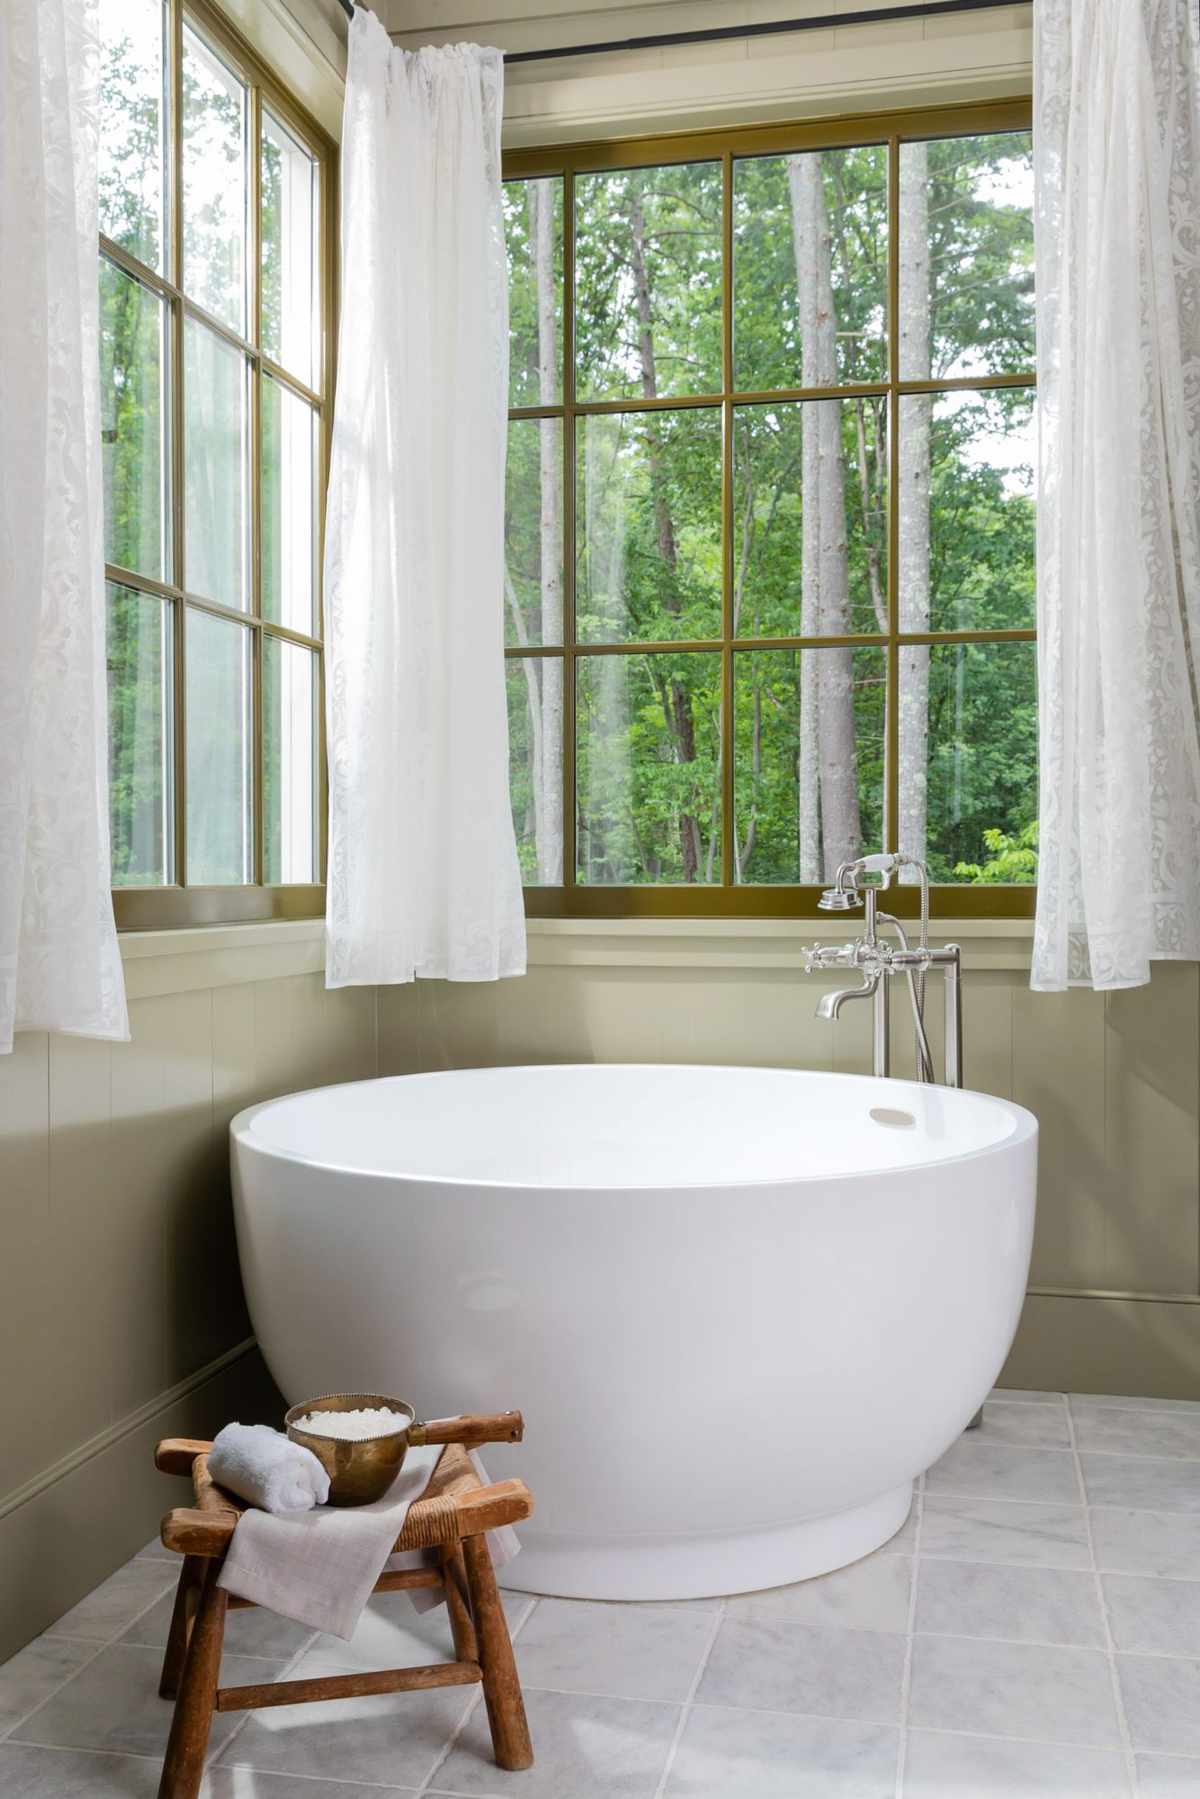 Idea House 2020 Main Bath with Soaking Tub in Corner by Windows